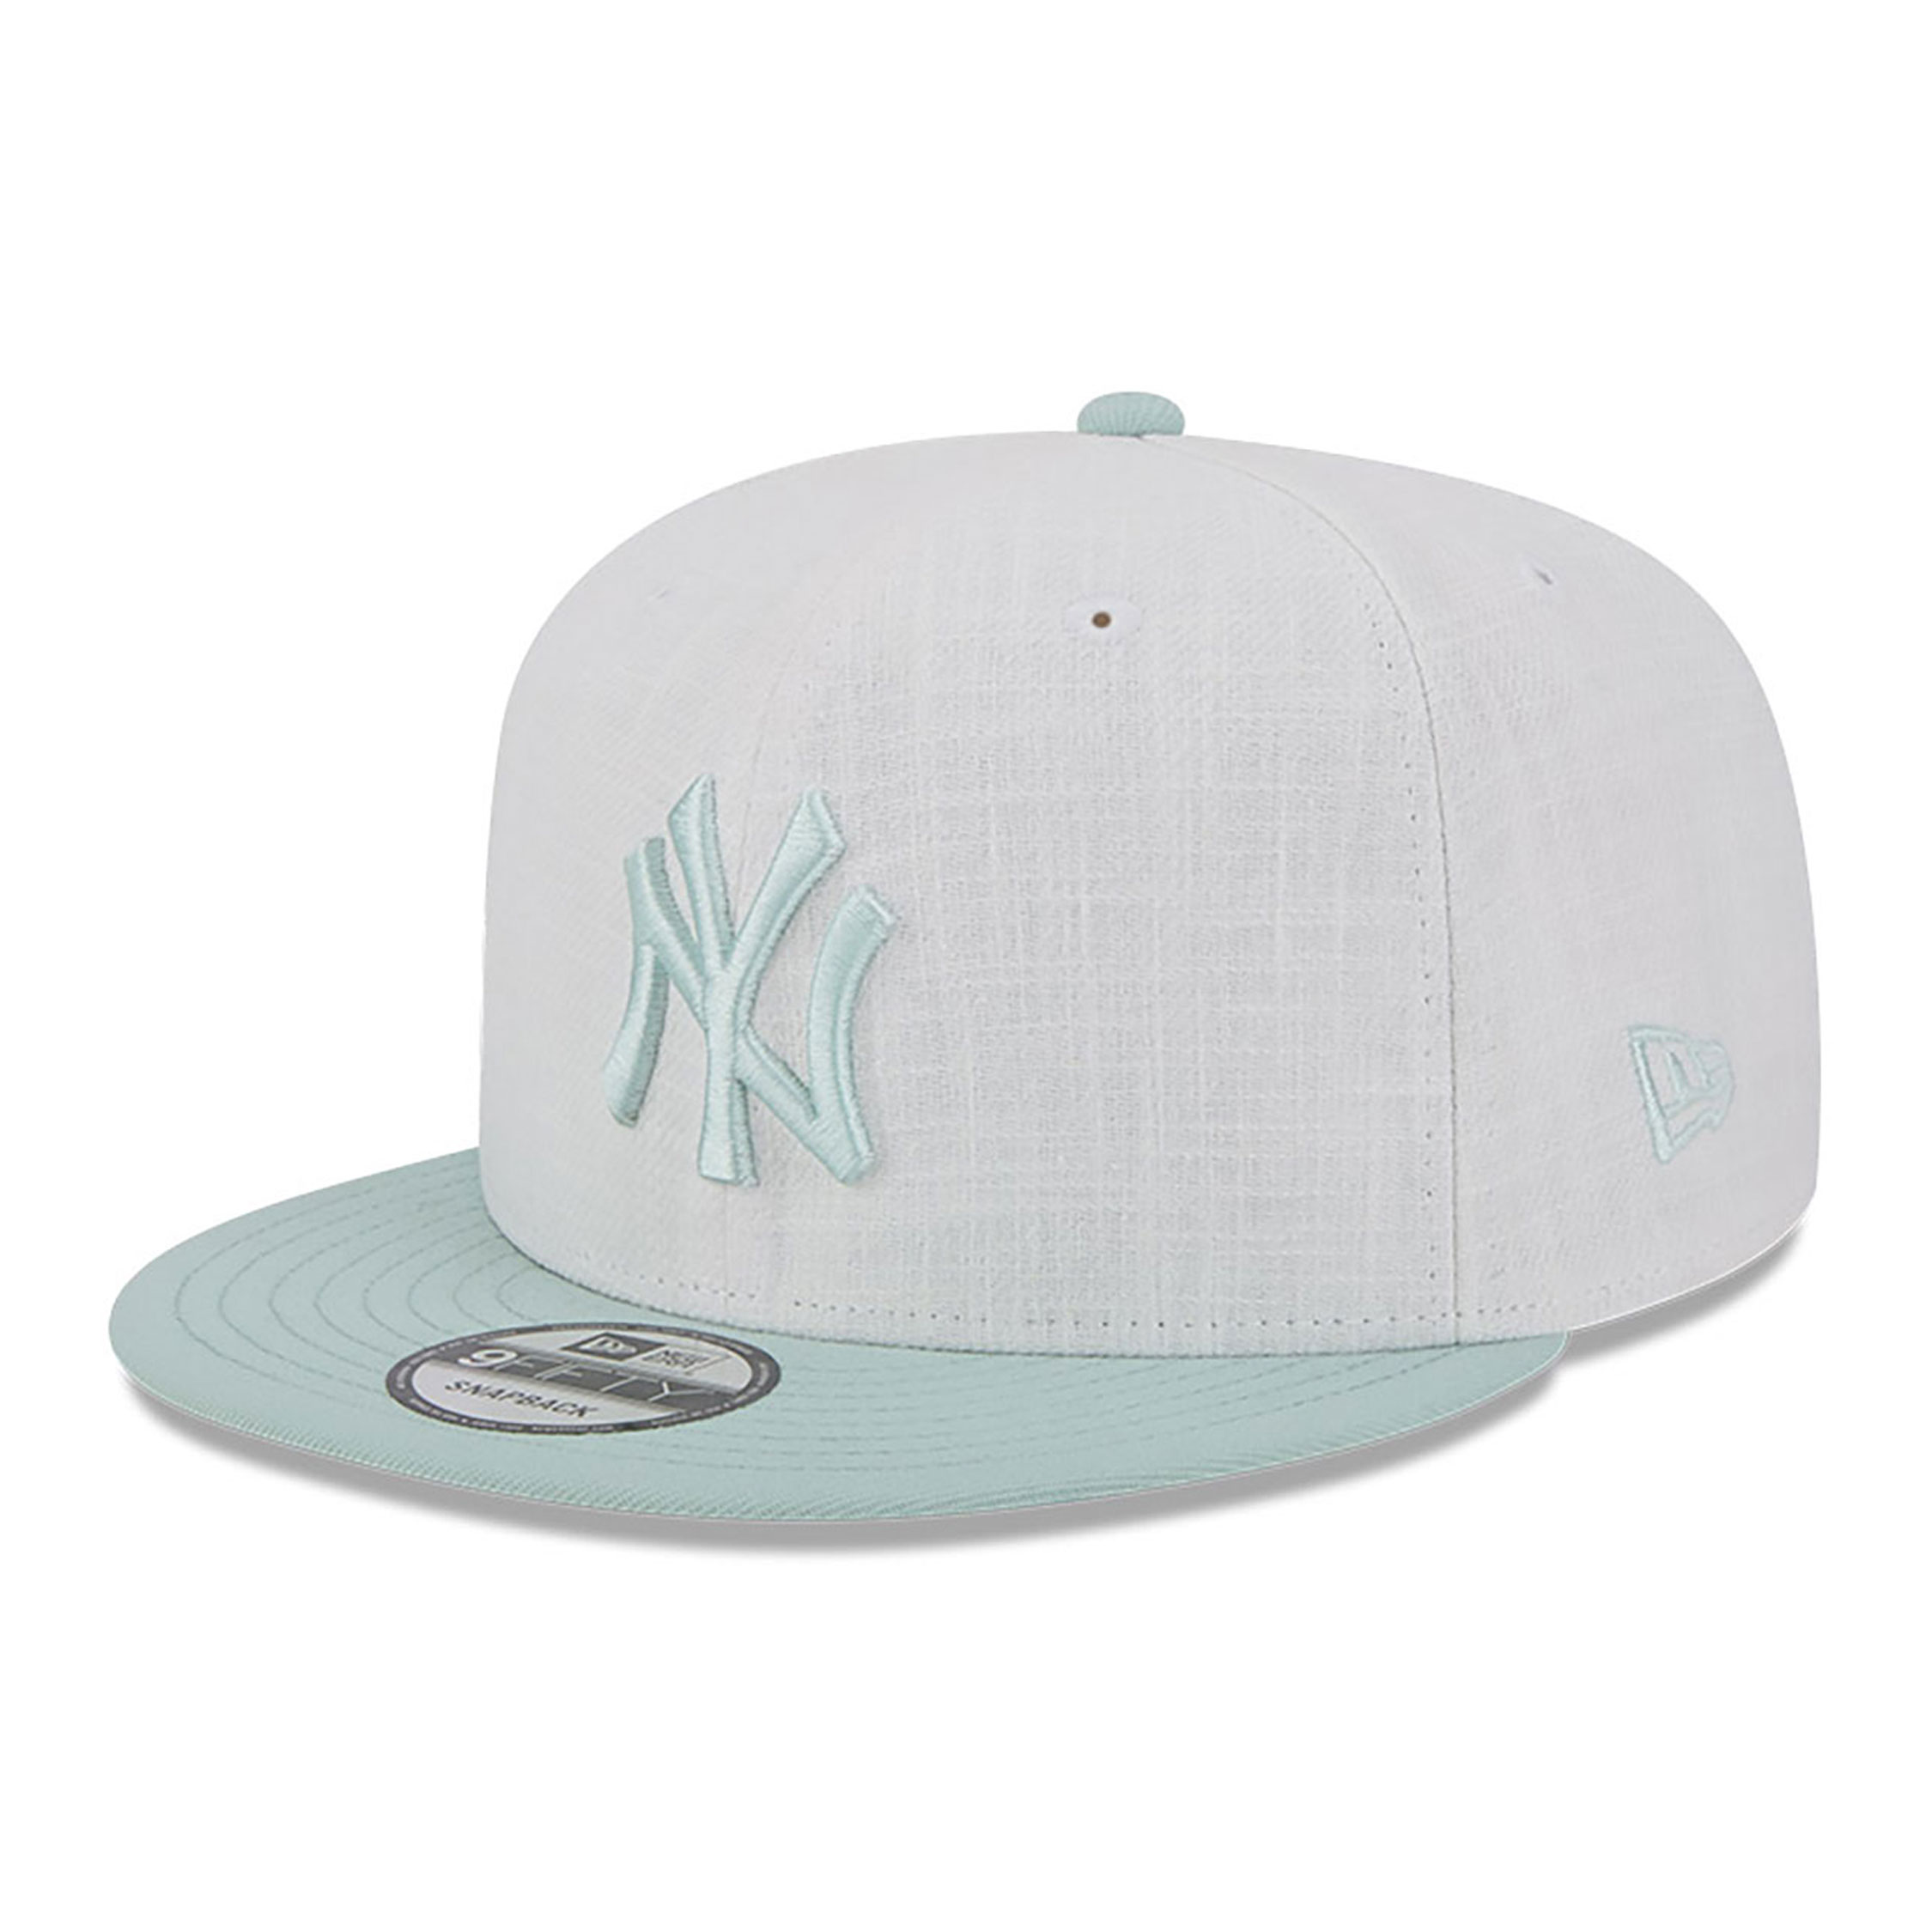 New York Yankees Minty Breeze White 9FIFTY Snapback Cap